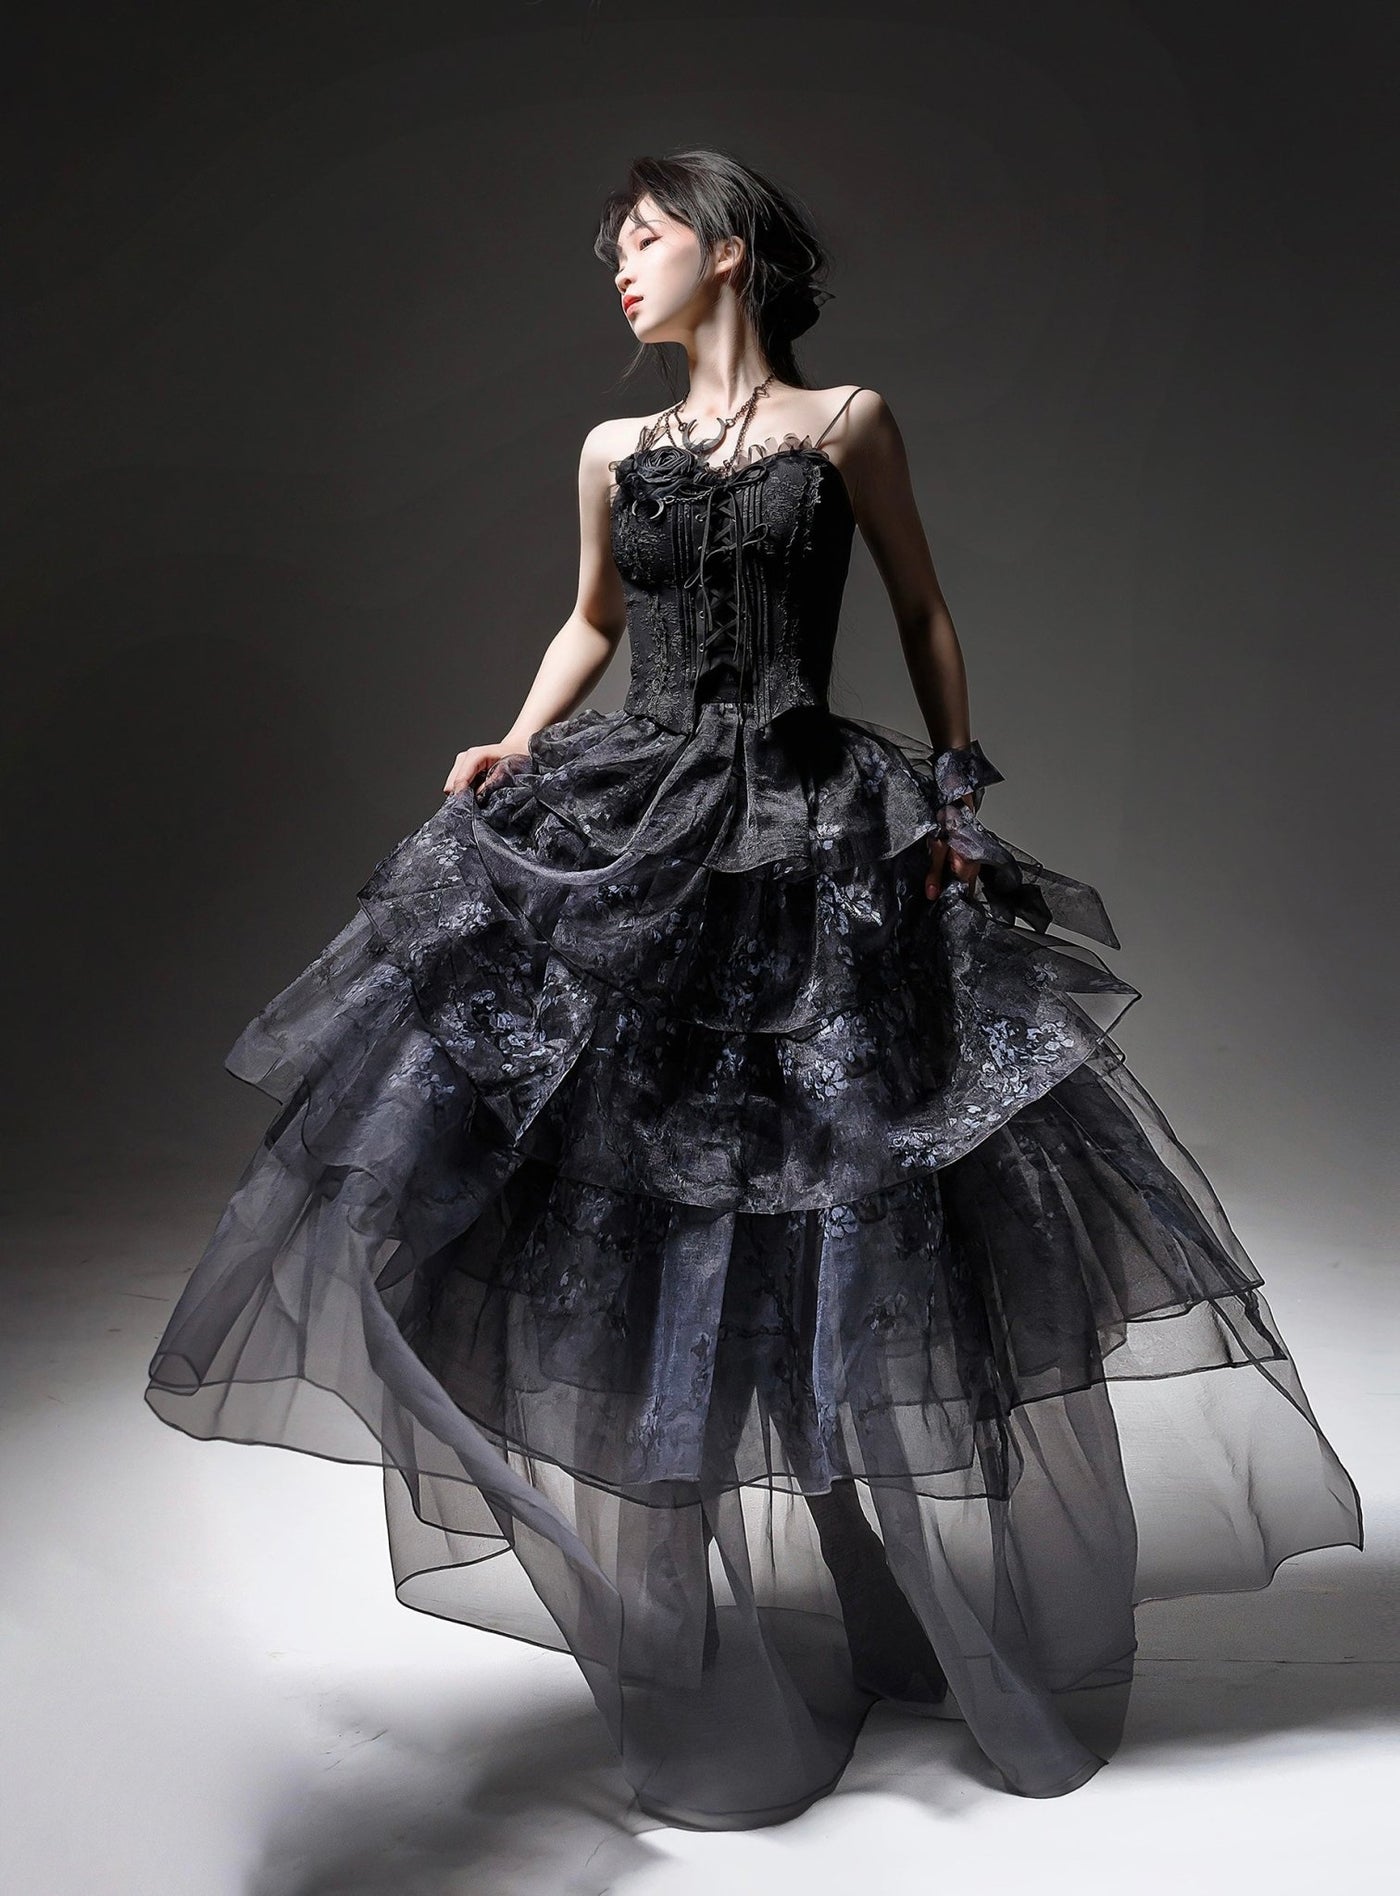 Black Gothic Lace Ball Gown Wedding Dress - DarkinCloset.com